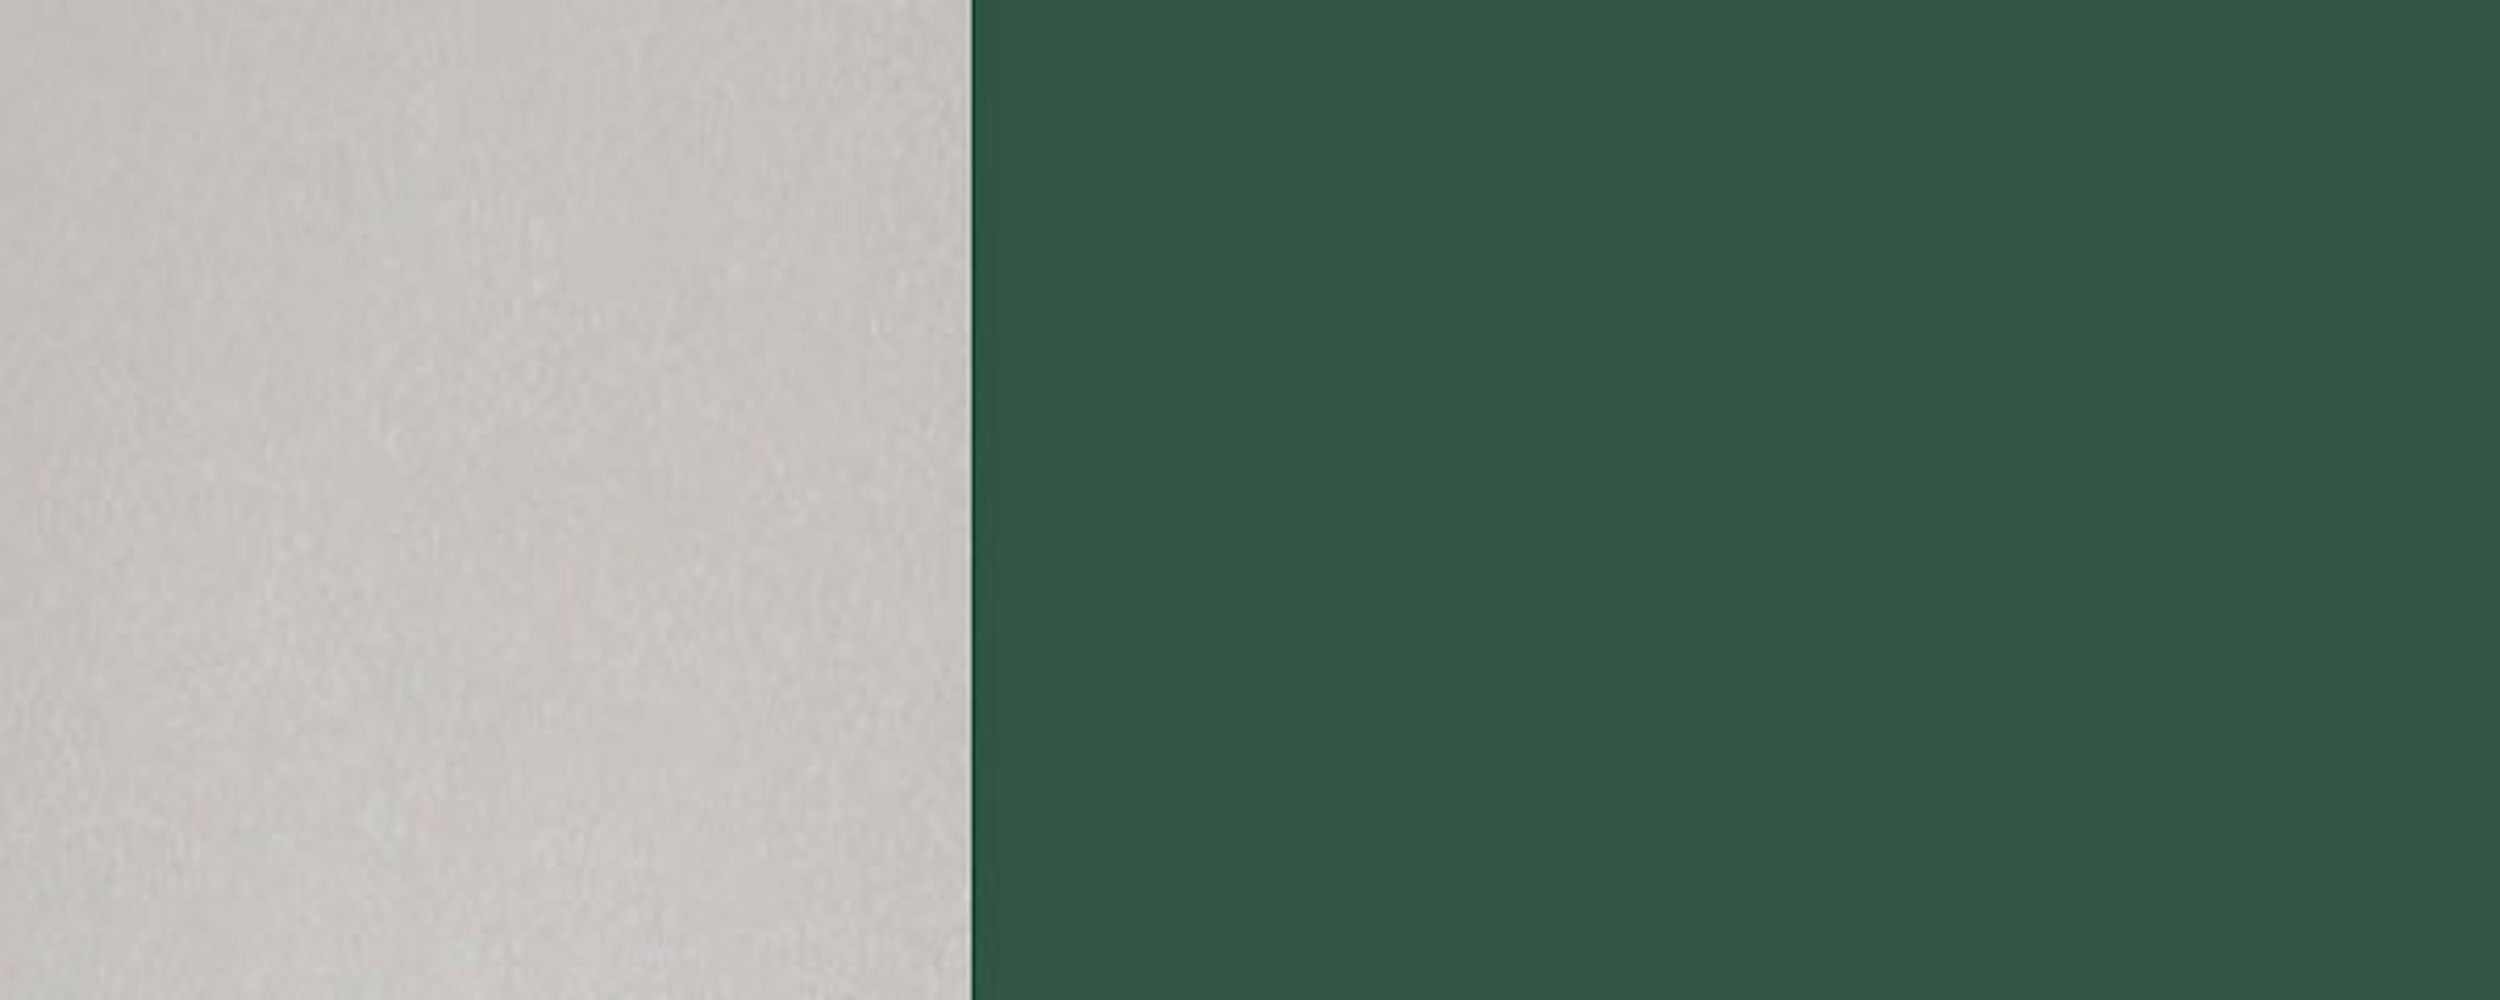 Feldmann-Wohnen Unterschrank Korpusfarbe und matt kieferngrün Front-, wählbar 1-türig Ausführung (Tivoli) 84cm RAL 6028 Tivoli